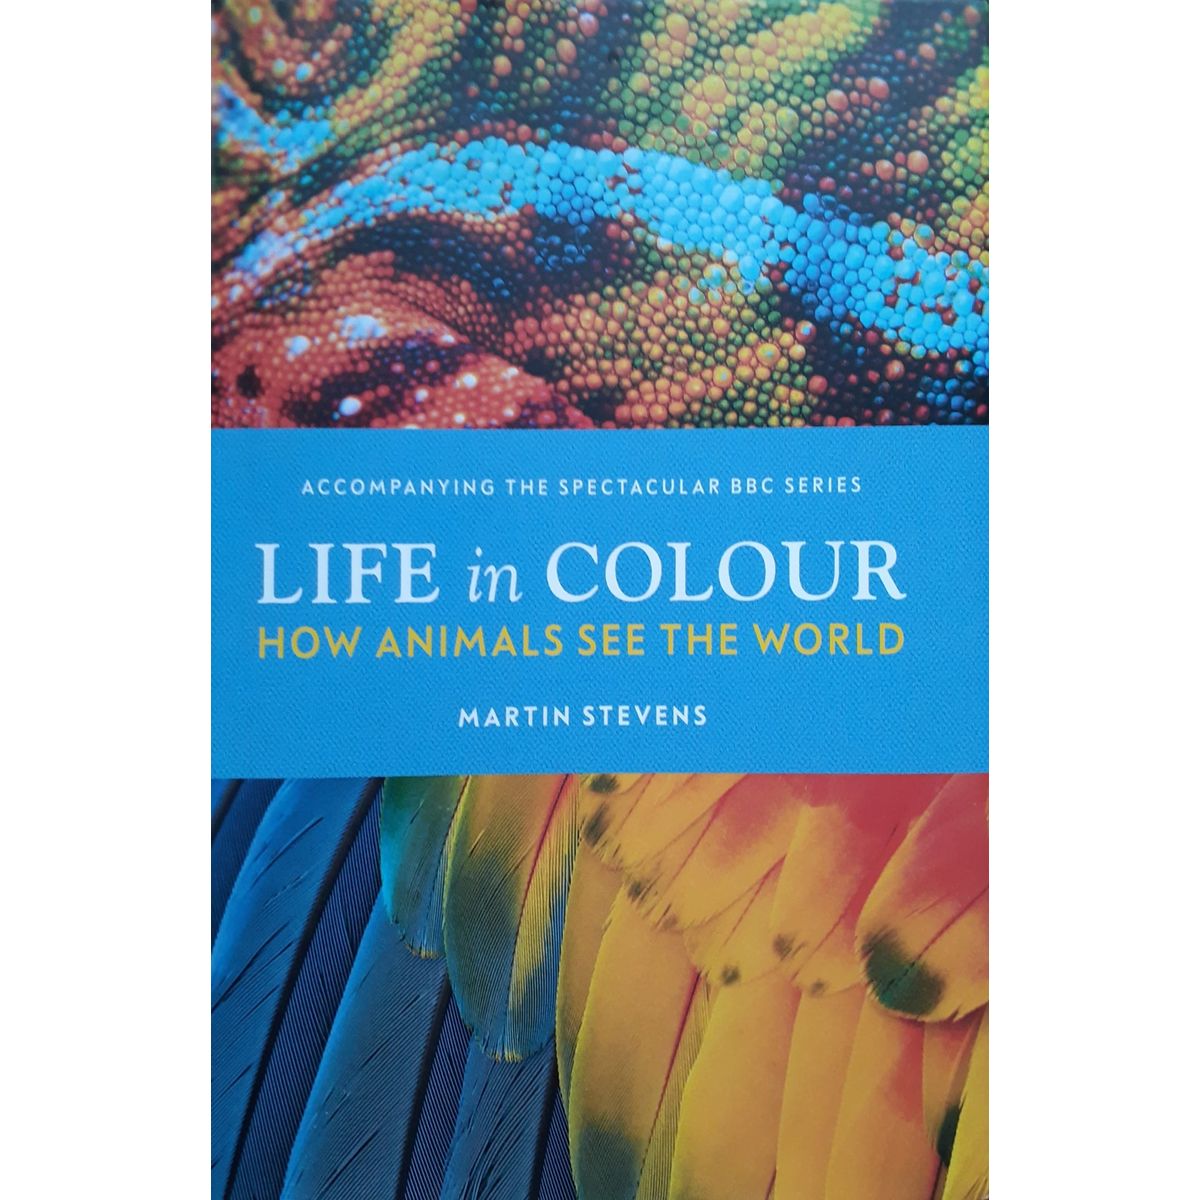 ISBN: 9781785946370 / 1785946374 - Life in Colour by Martin Stevens [2021]